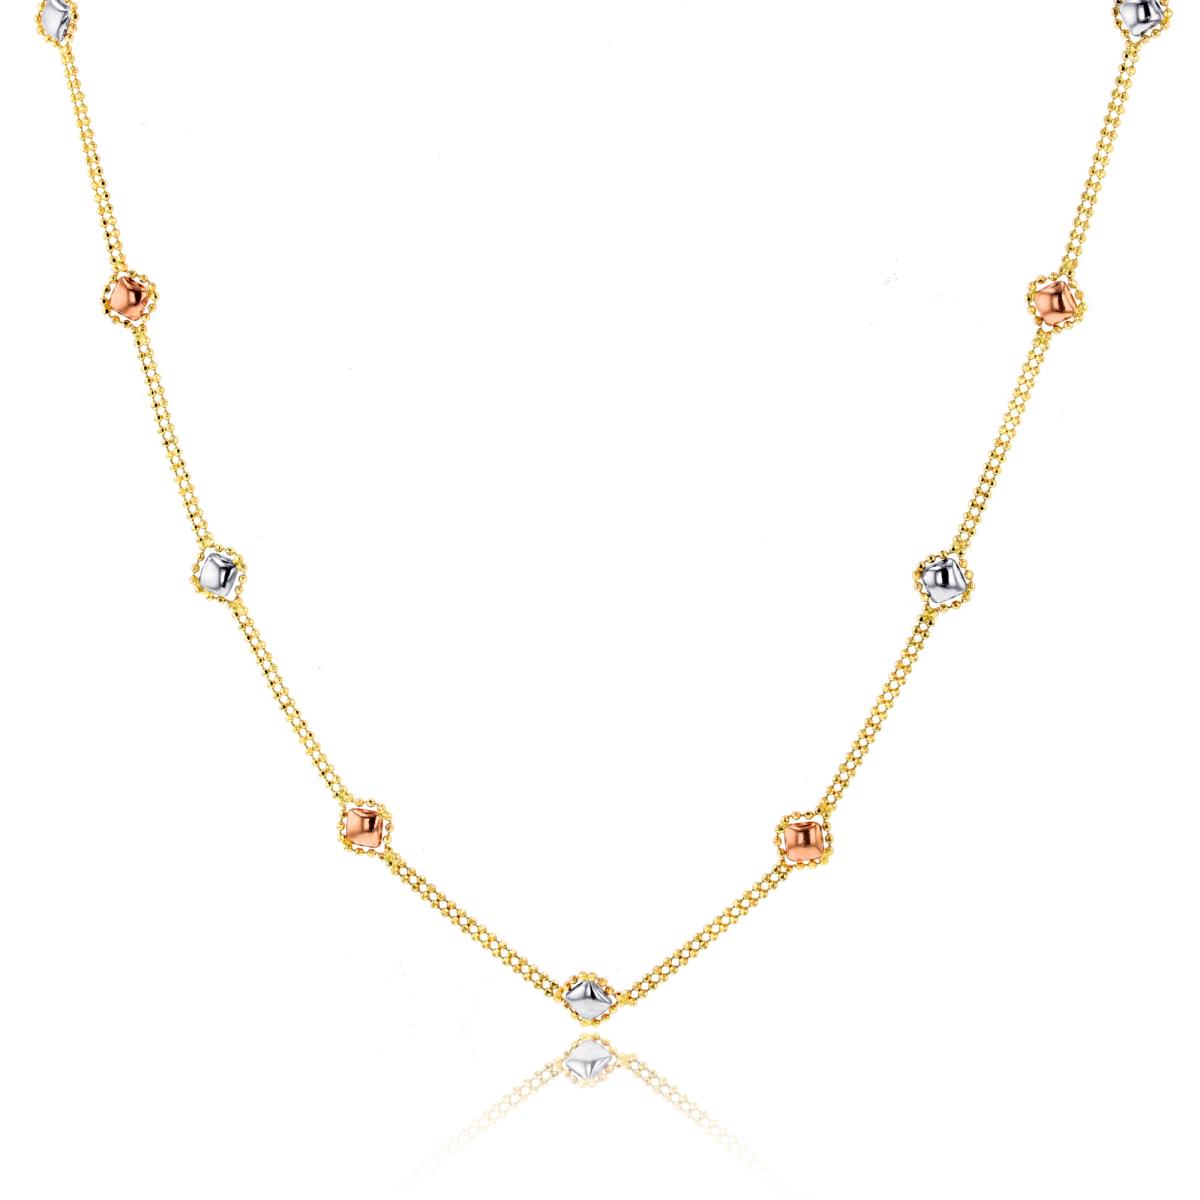 10K Tri-Color Gold Diamond Bead Chain 17" Necklace